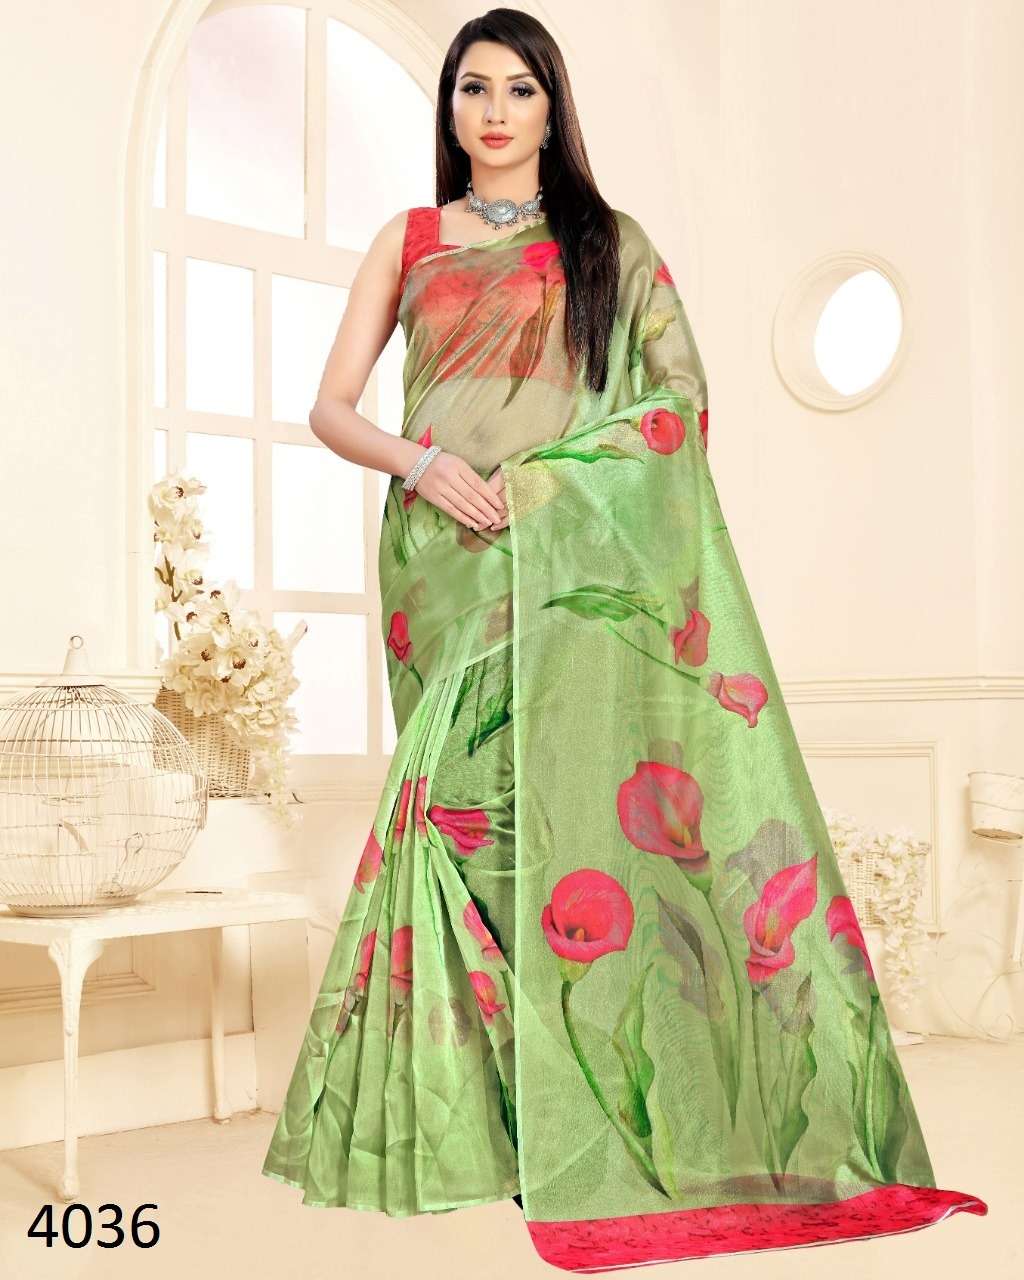 parampara by Kapda fashion desginer organza saree collection